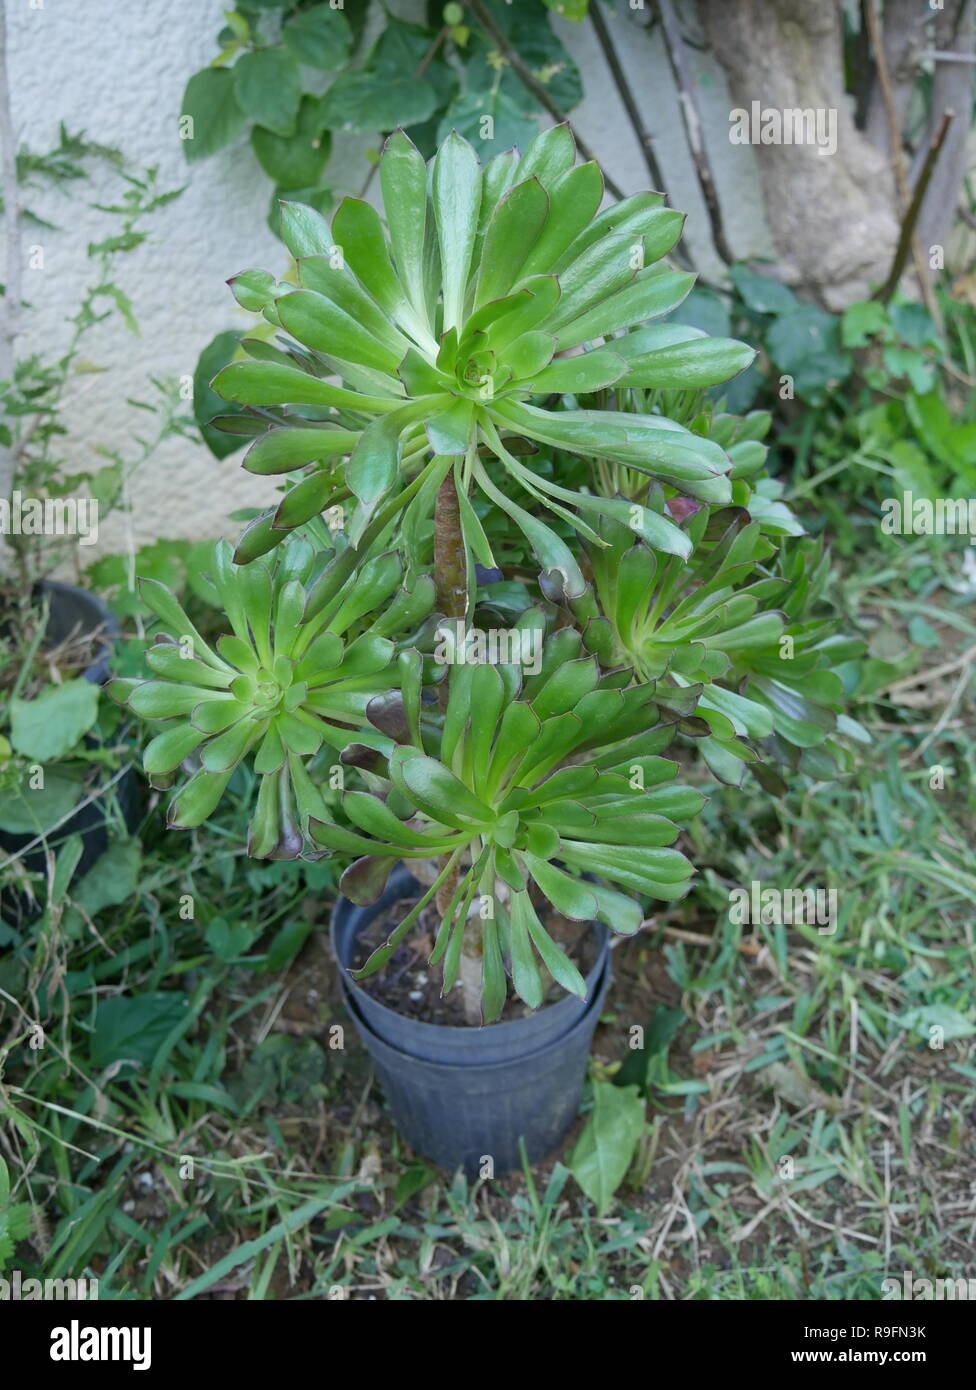 Tree houseleek in a pot. Aeonium, a subtropical plants of the family Crassulaceae. Stock Photo